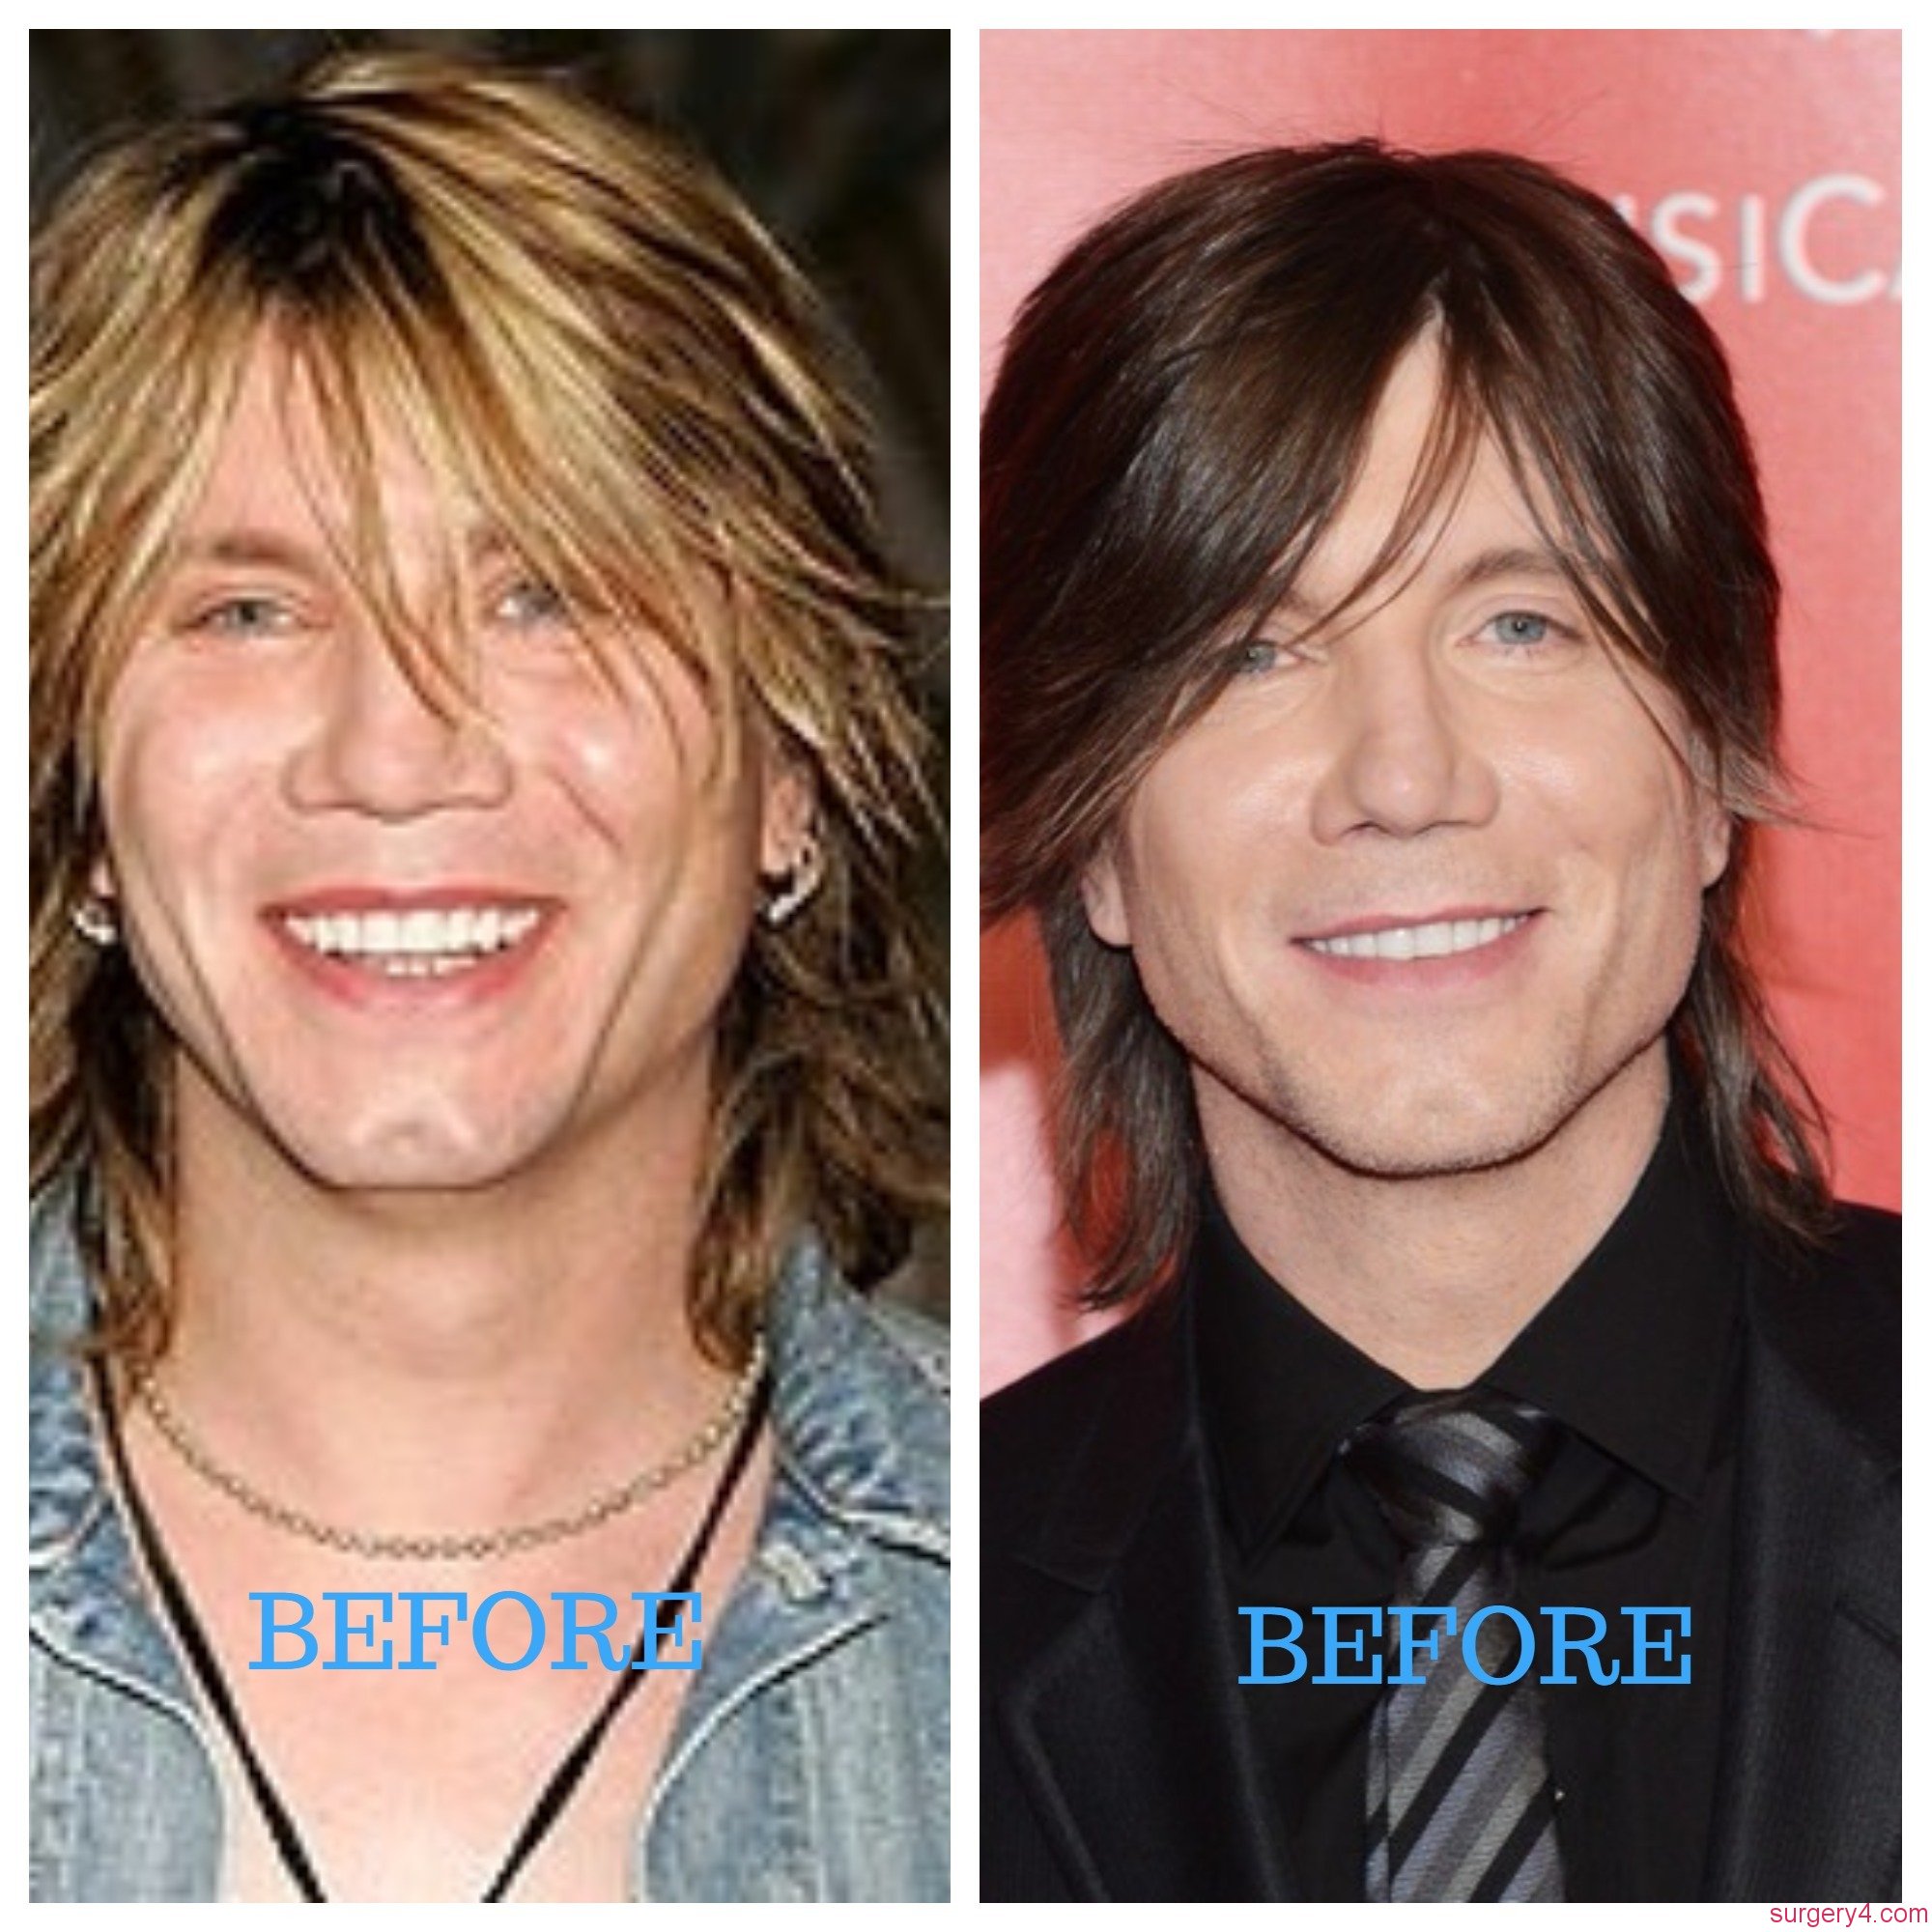 John Rzeznik Plastic Surgery Photos [Before & After] - Surgery4.